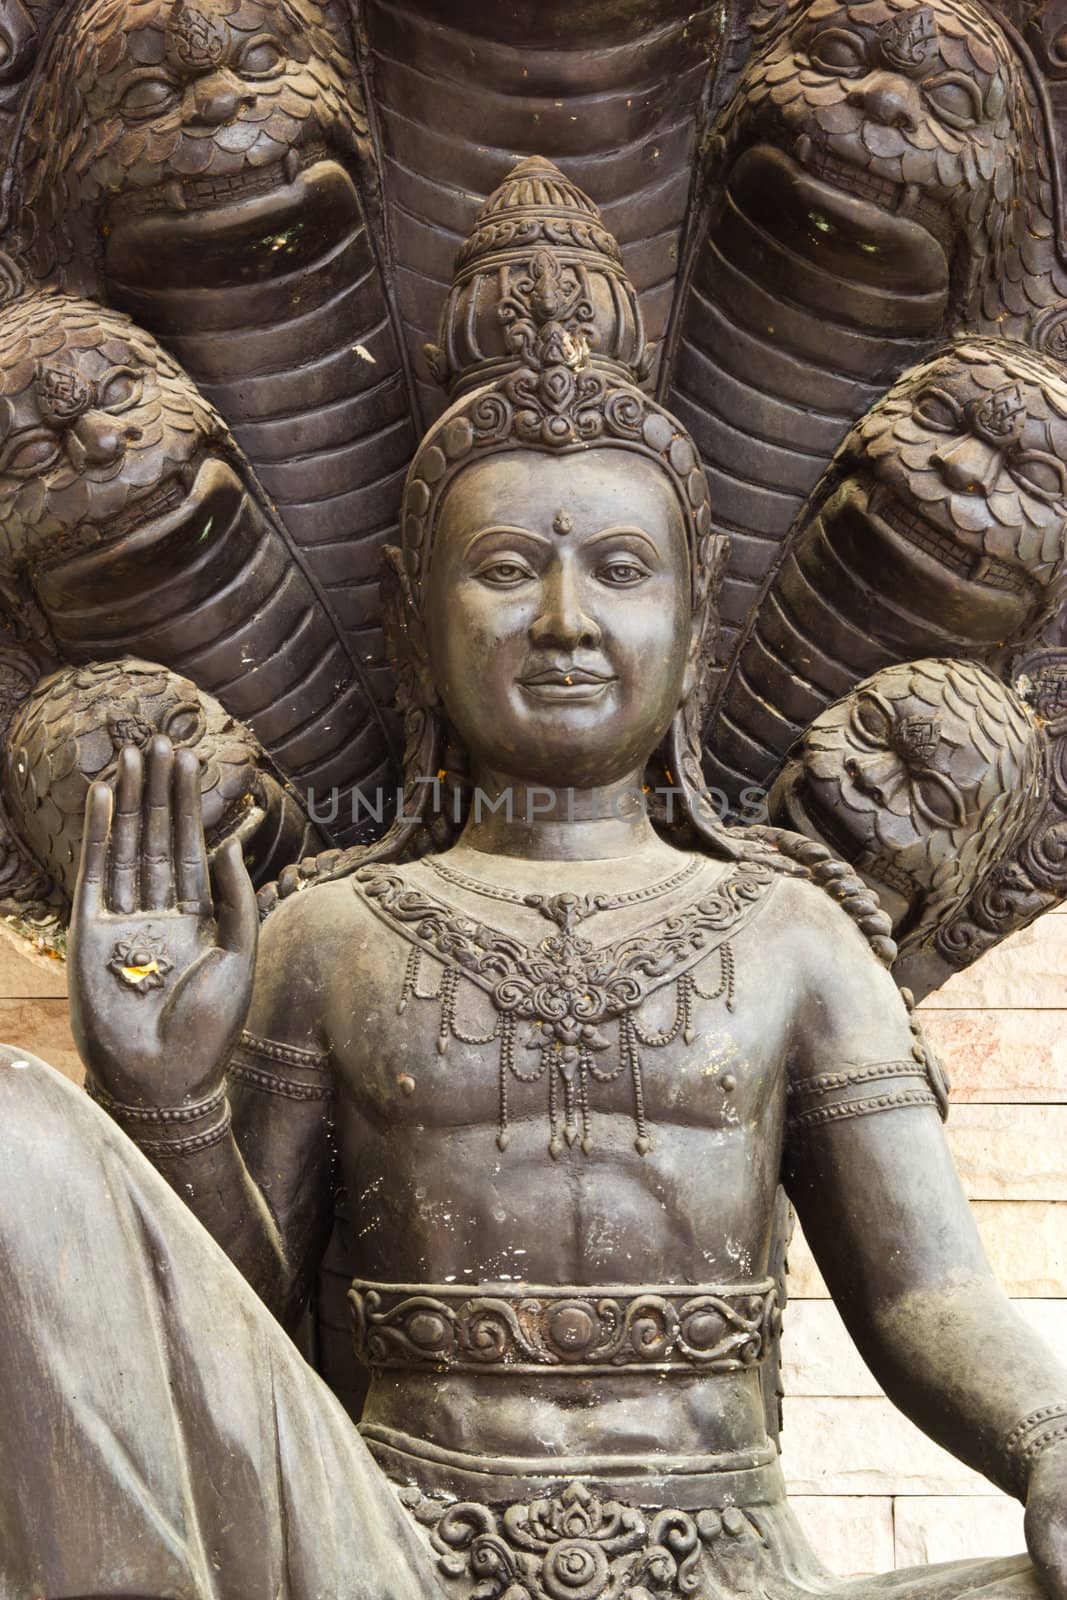 old Stone Buddha Statue at thailand